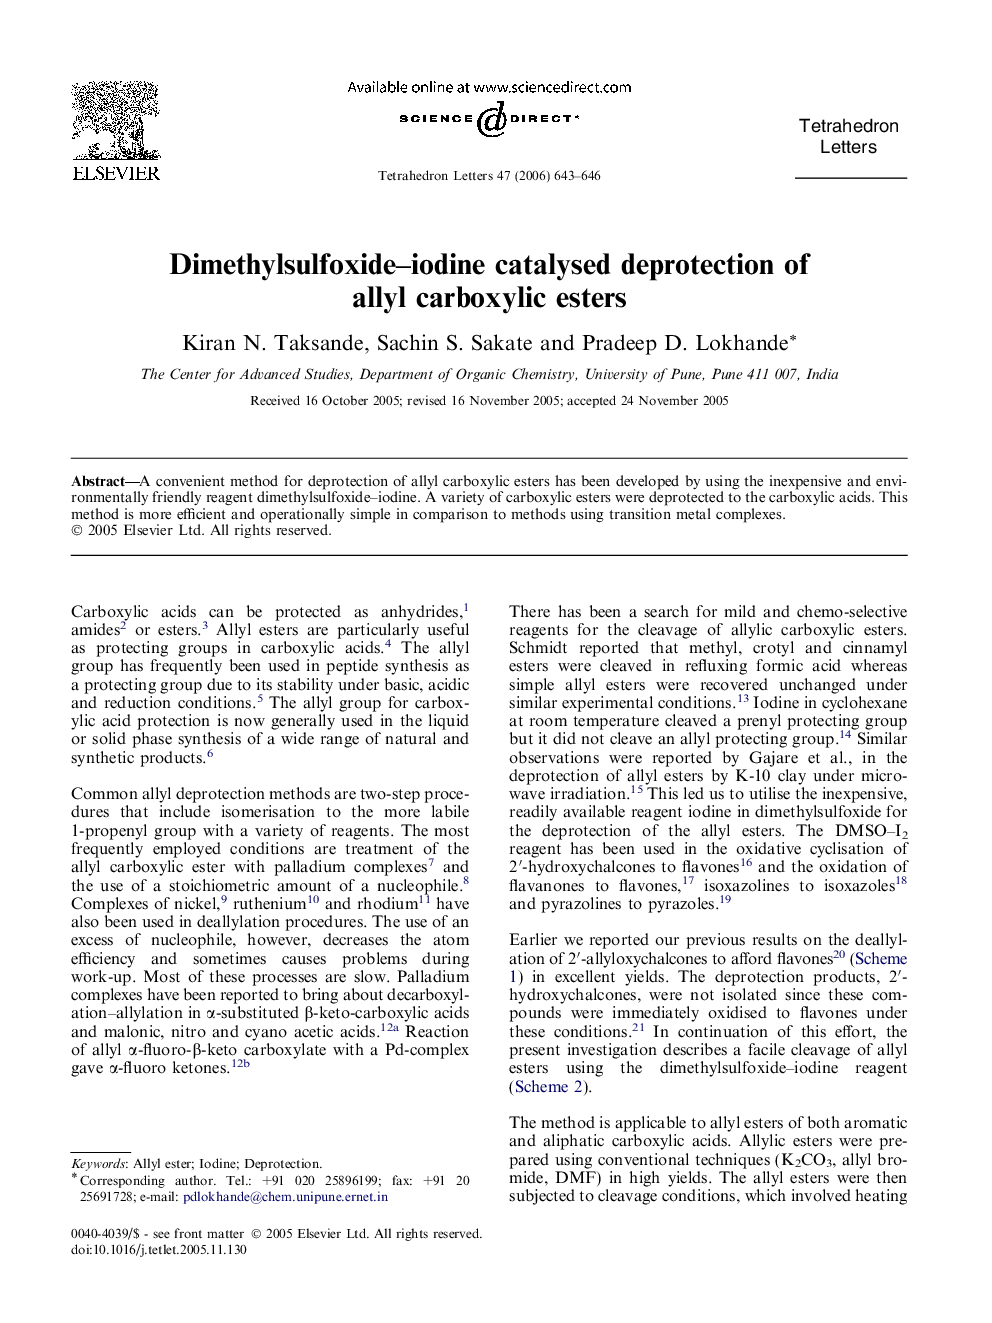 Dimethylsulfoxide-iodine catalysed deprotection of allyl carboxylic esters